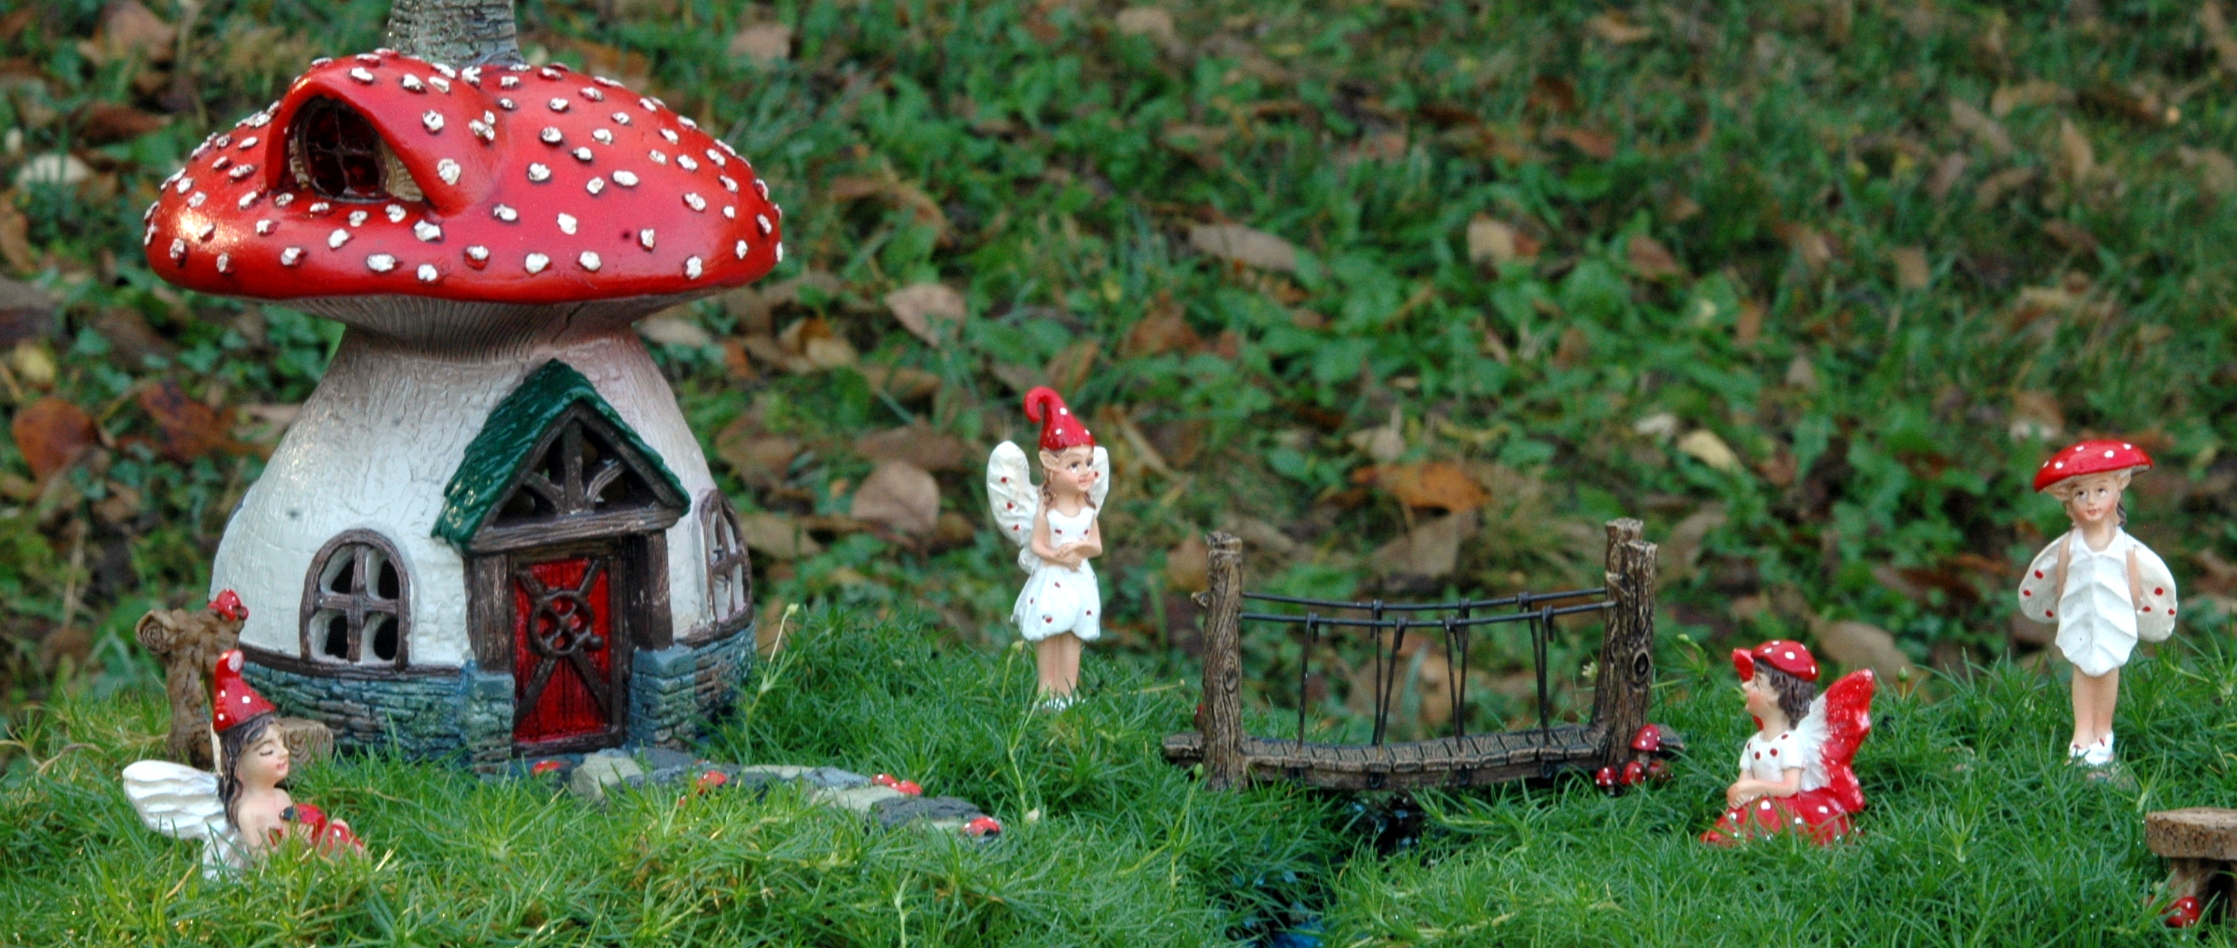 Fairy Garden Supplies | Miniature Fairies, Houses, Accessories